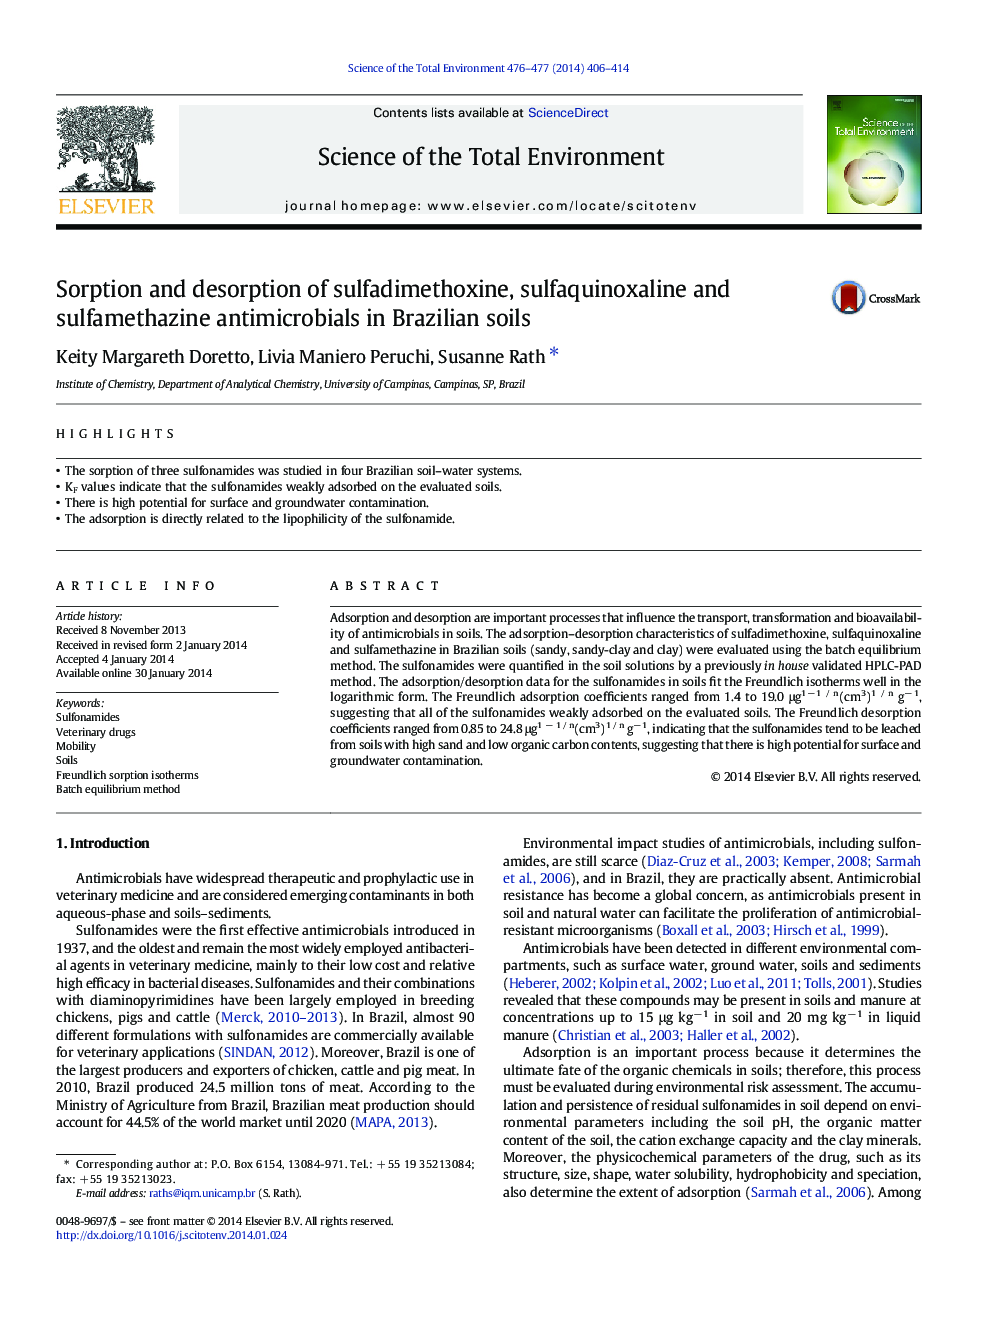 Sorption and desorption of sulfadimethoxine, sulfaquinoxaline and sulfamethazine antimicrobials in Brazilian soils